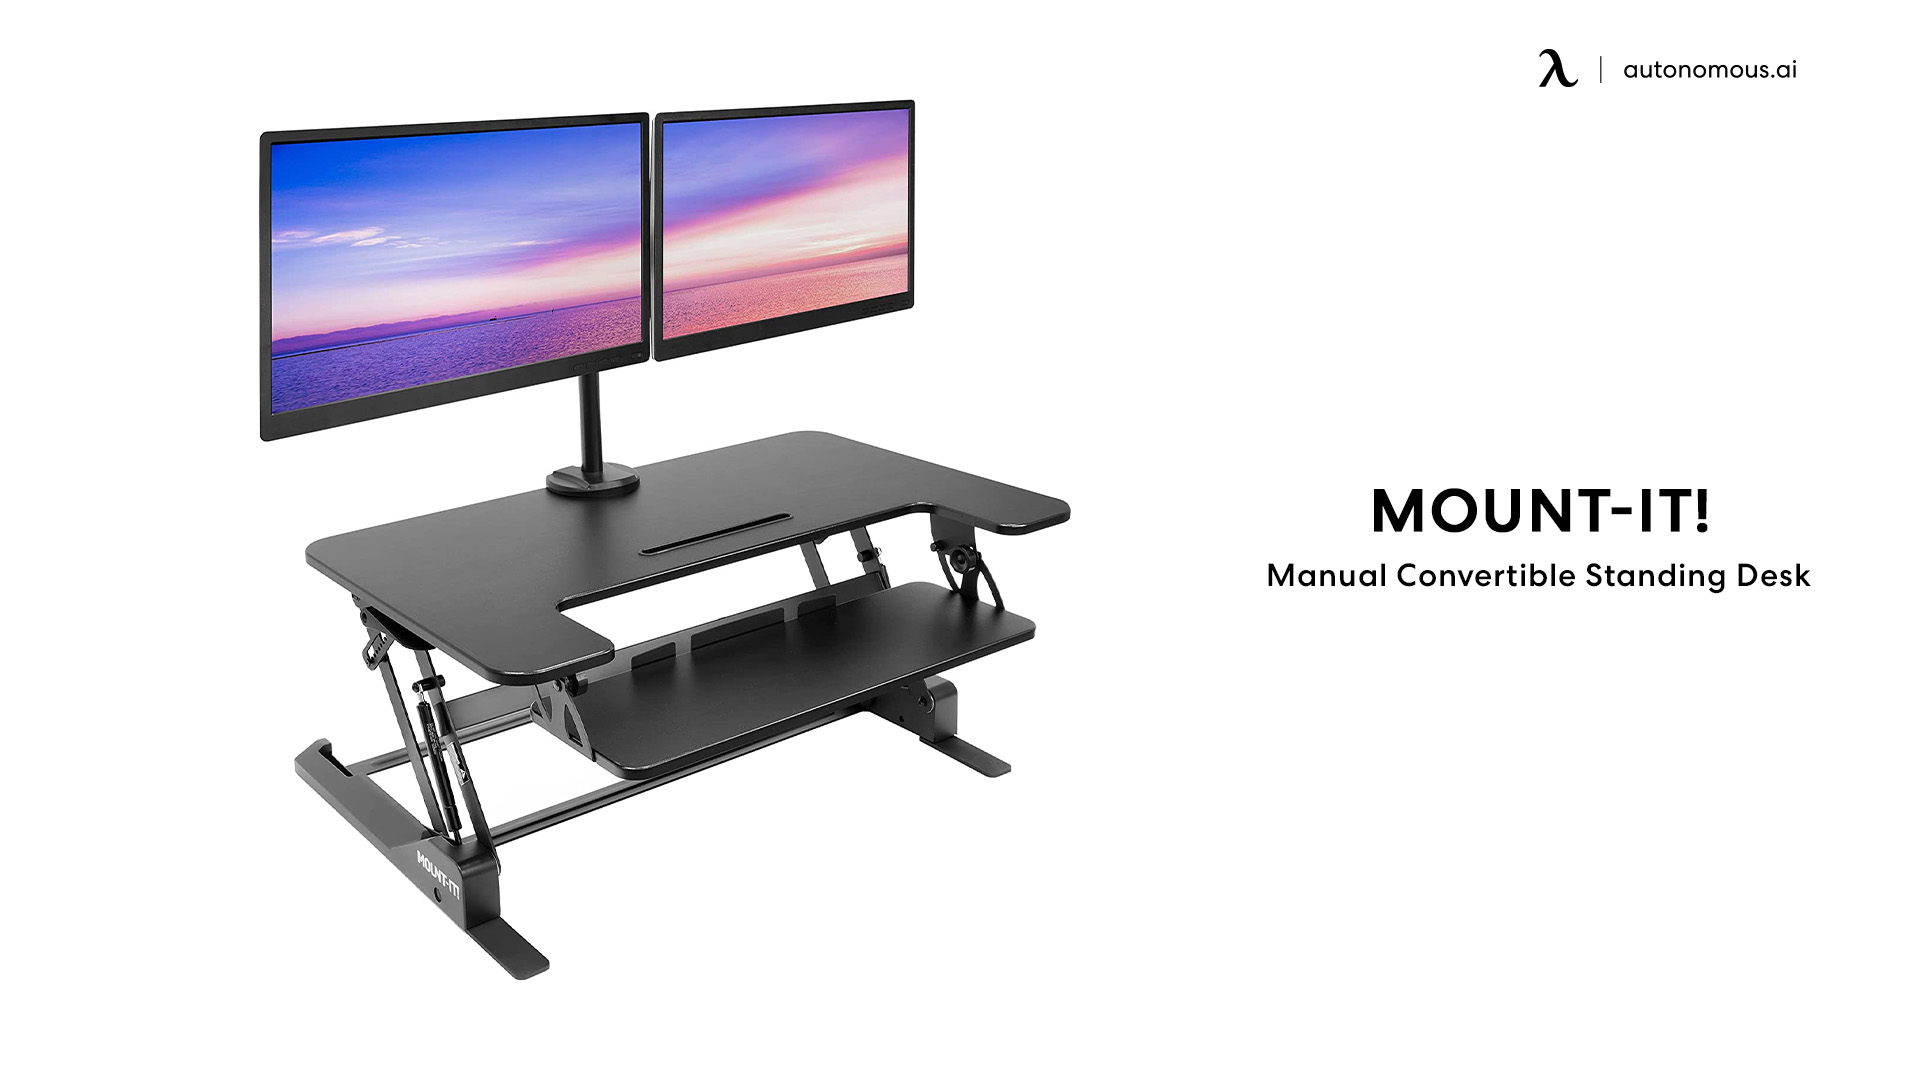 Standing Desk Converter by Mount-It! in ergonomic home office